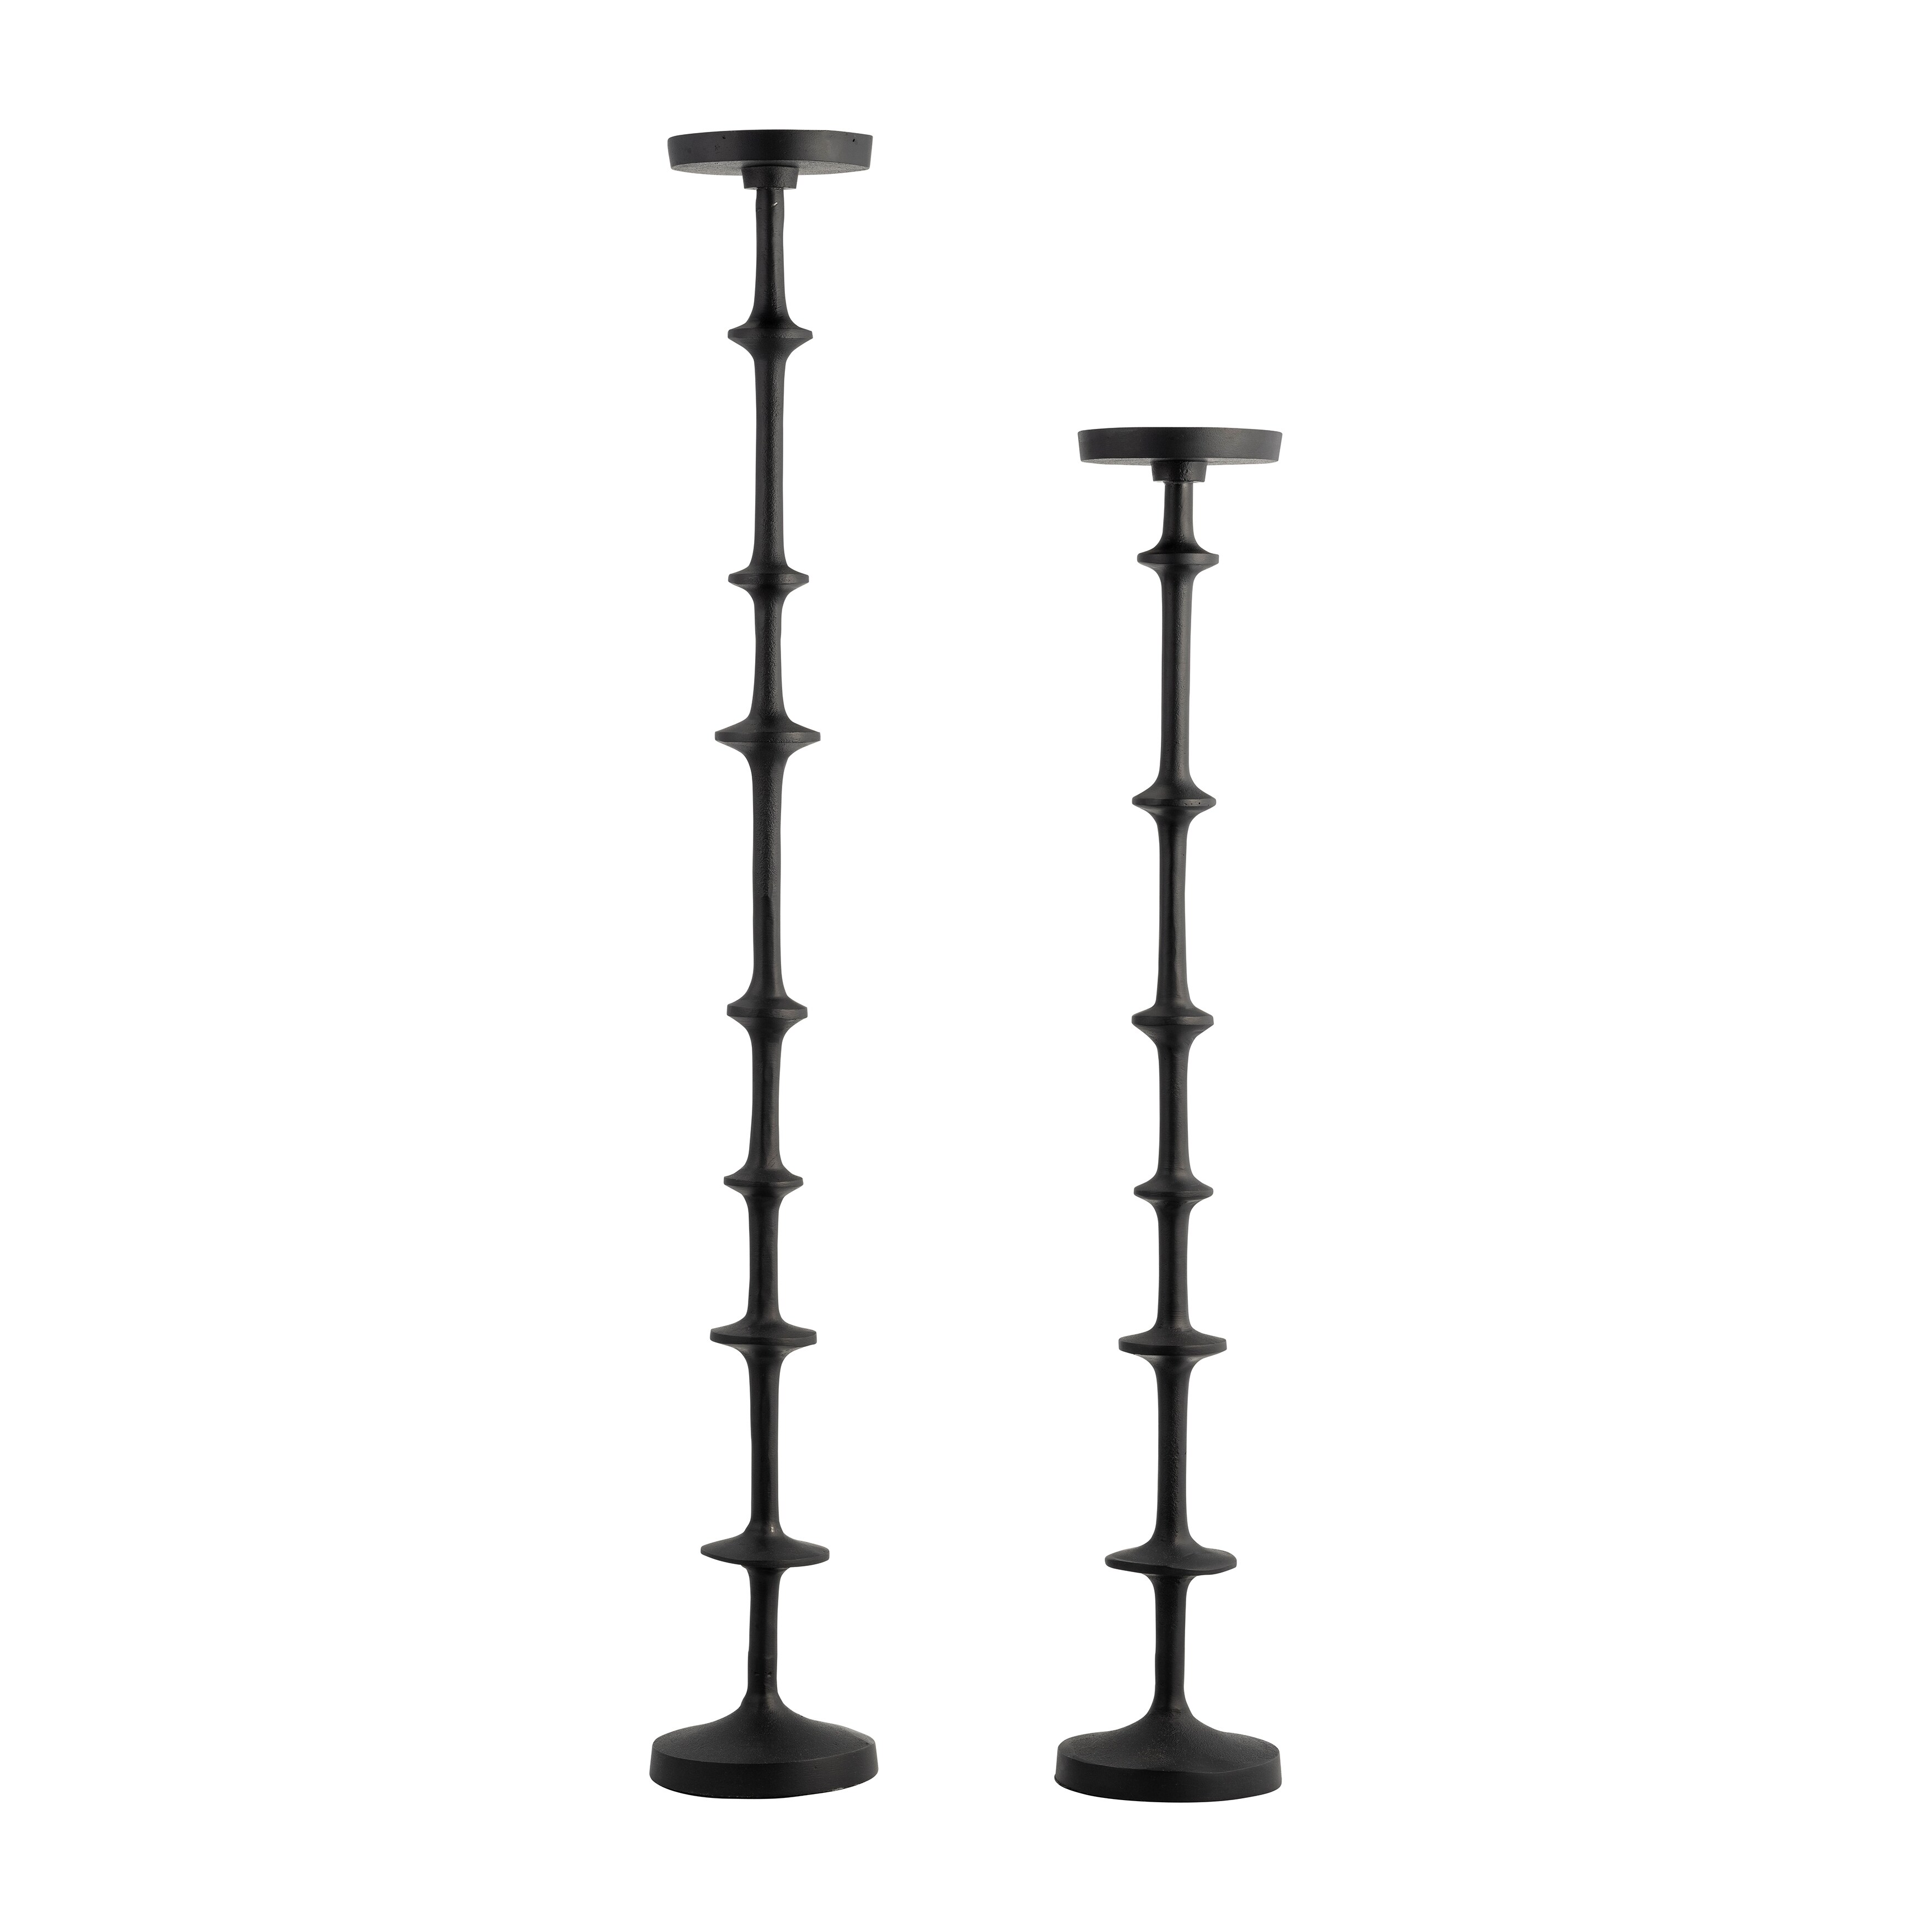 Sagebrook Home Metal, 36" Abacus Floor Pillar Candleholder, Black, Pillar, 36"H, Solid Color - 5" x 5" x 36"